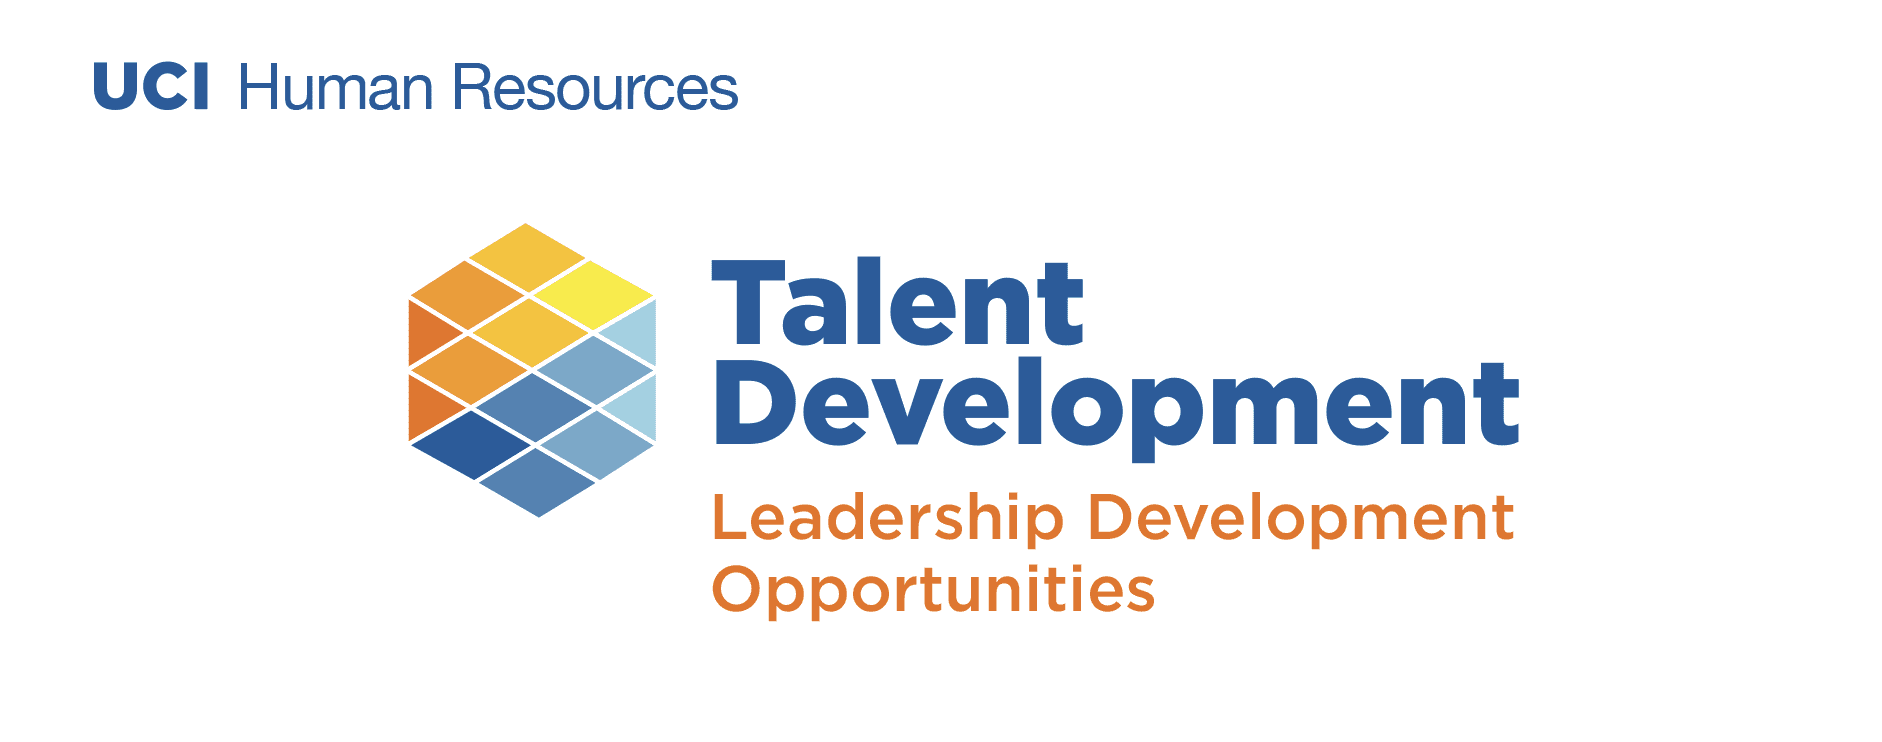 Talent Development - Leadership Development Opportunities